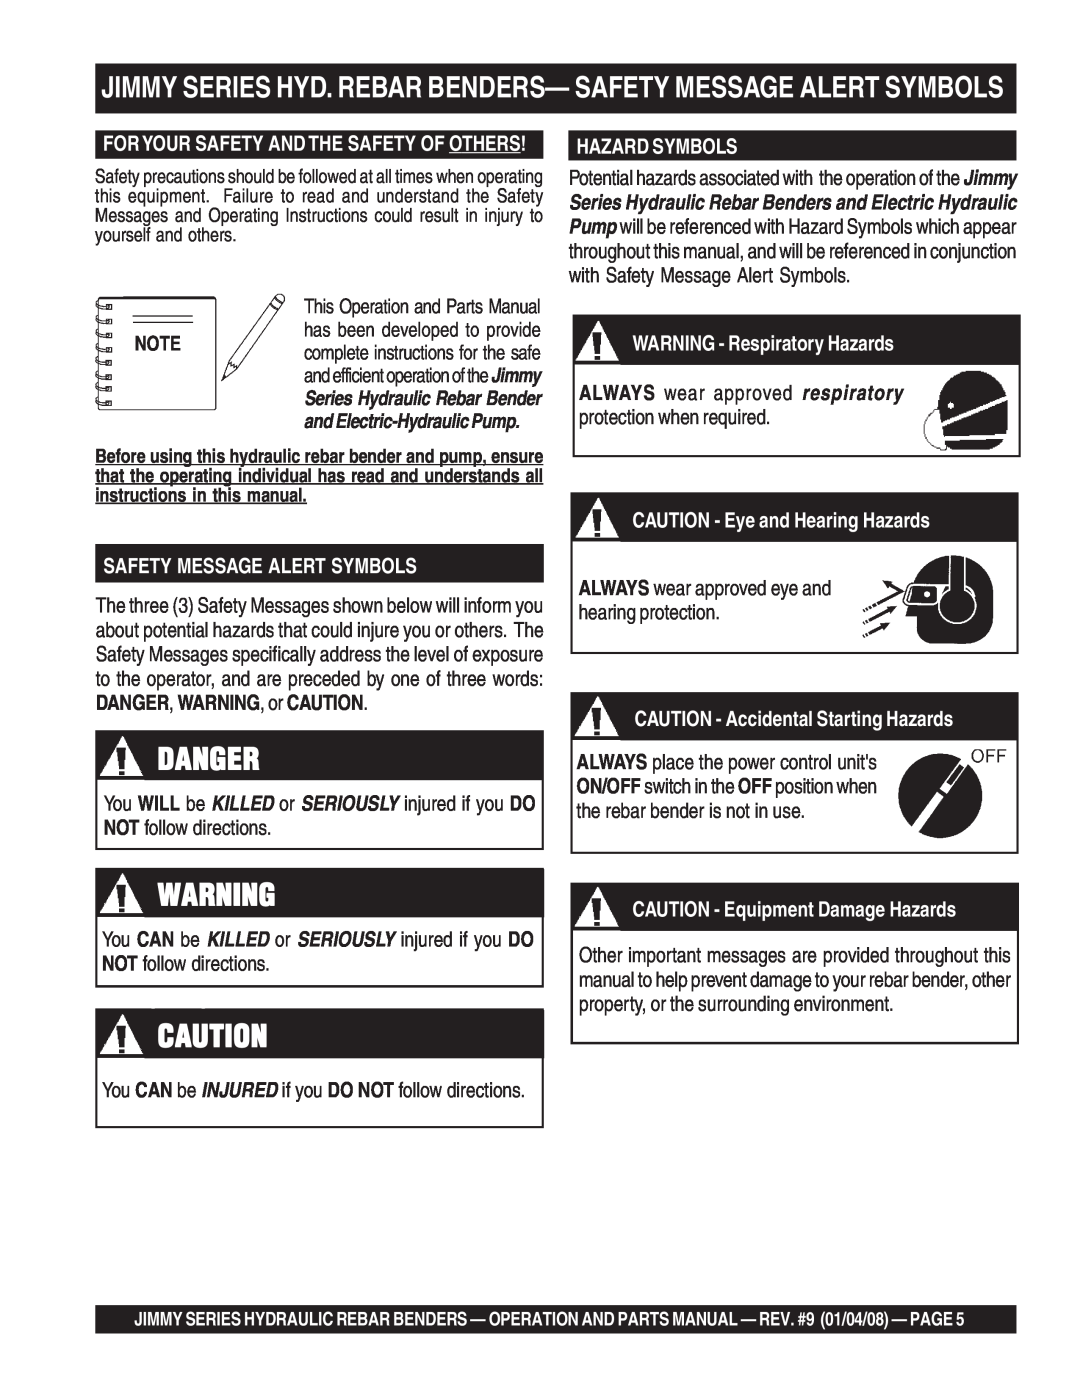 Multiquip JB5135, JPU1, JB5090, JB11090 Danger, Safety Message Alert Symbols, Hazard Symbols, WARNING - Respiratory Hazards 